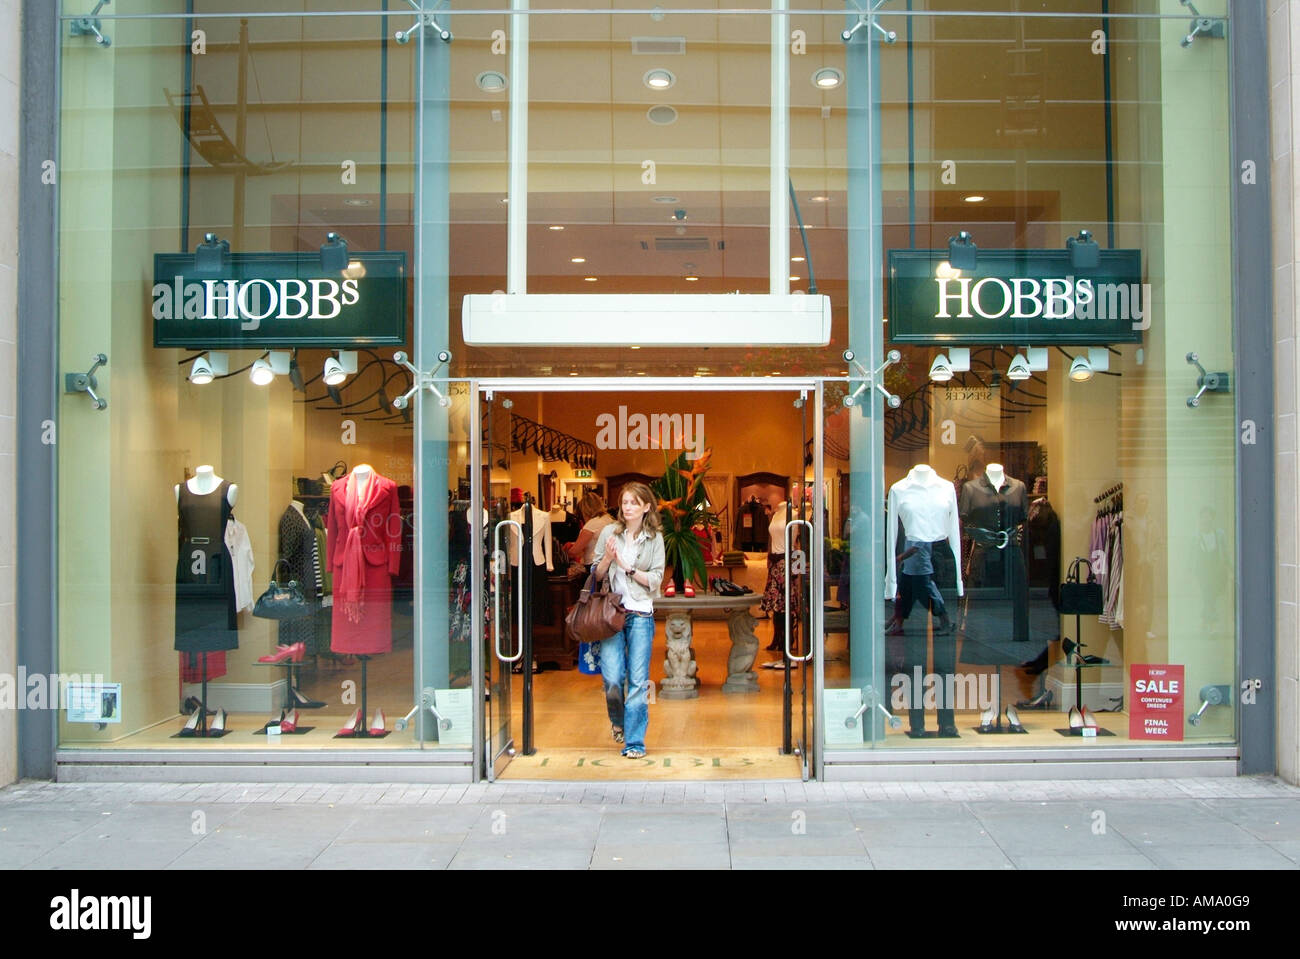 hobbs shop  front  Department store retail UK United Kingdom 